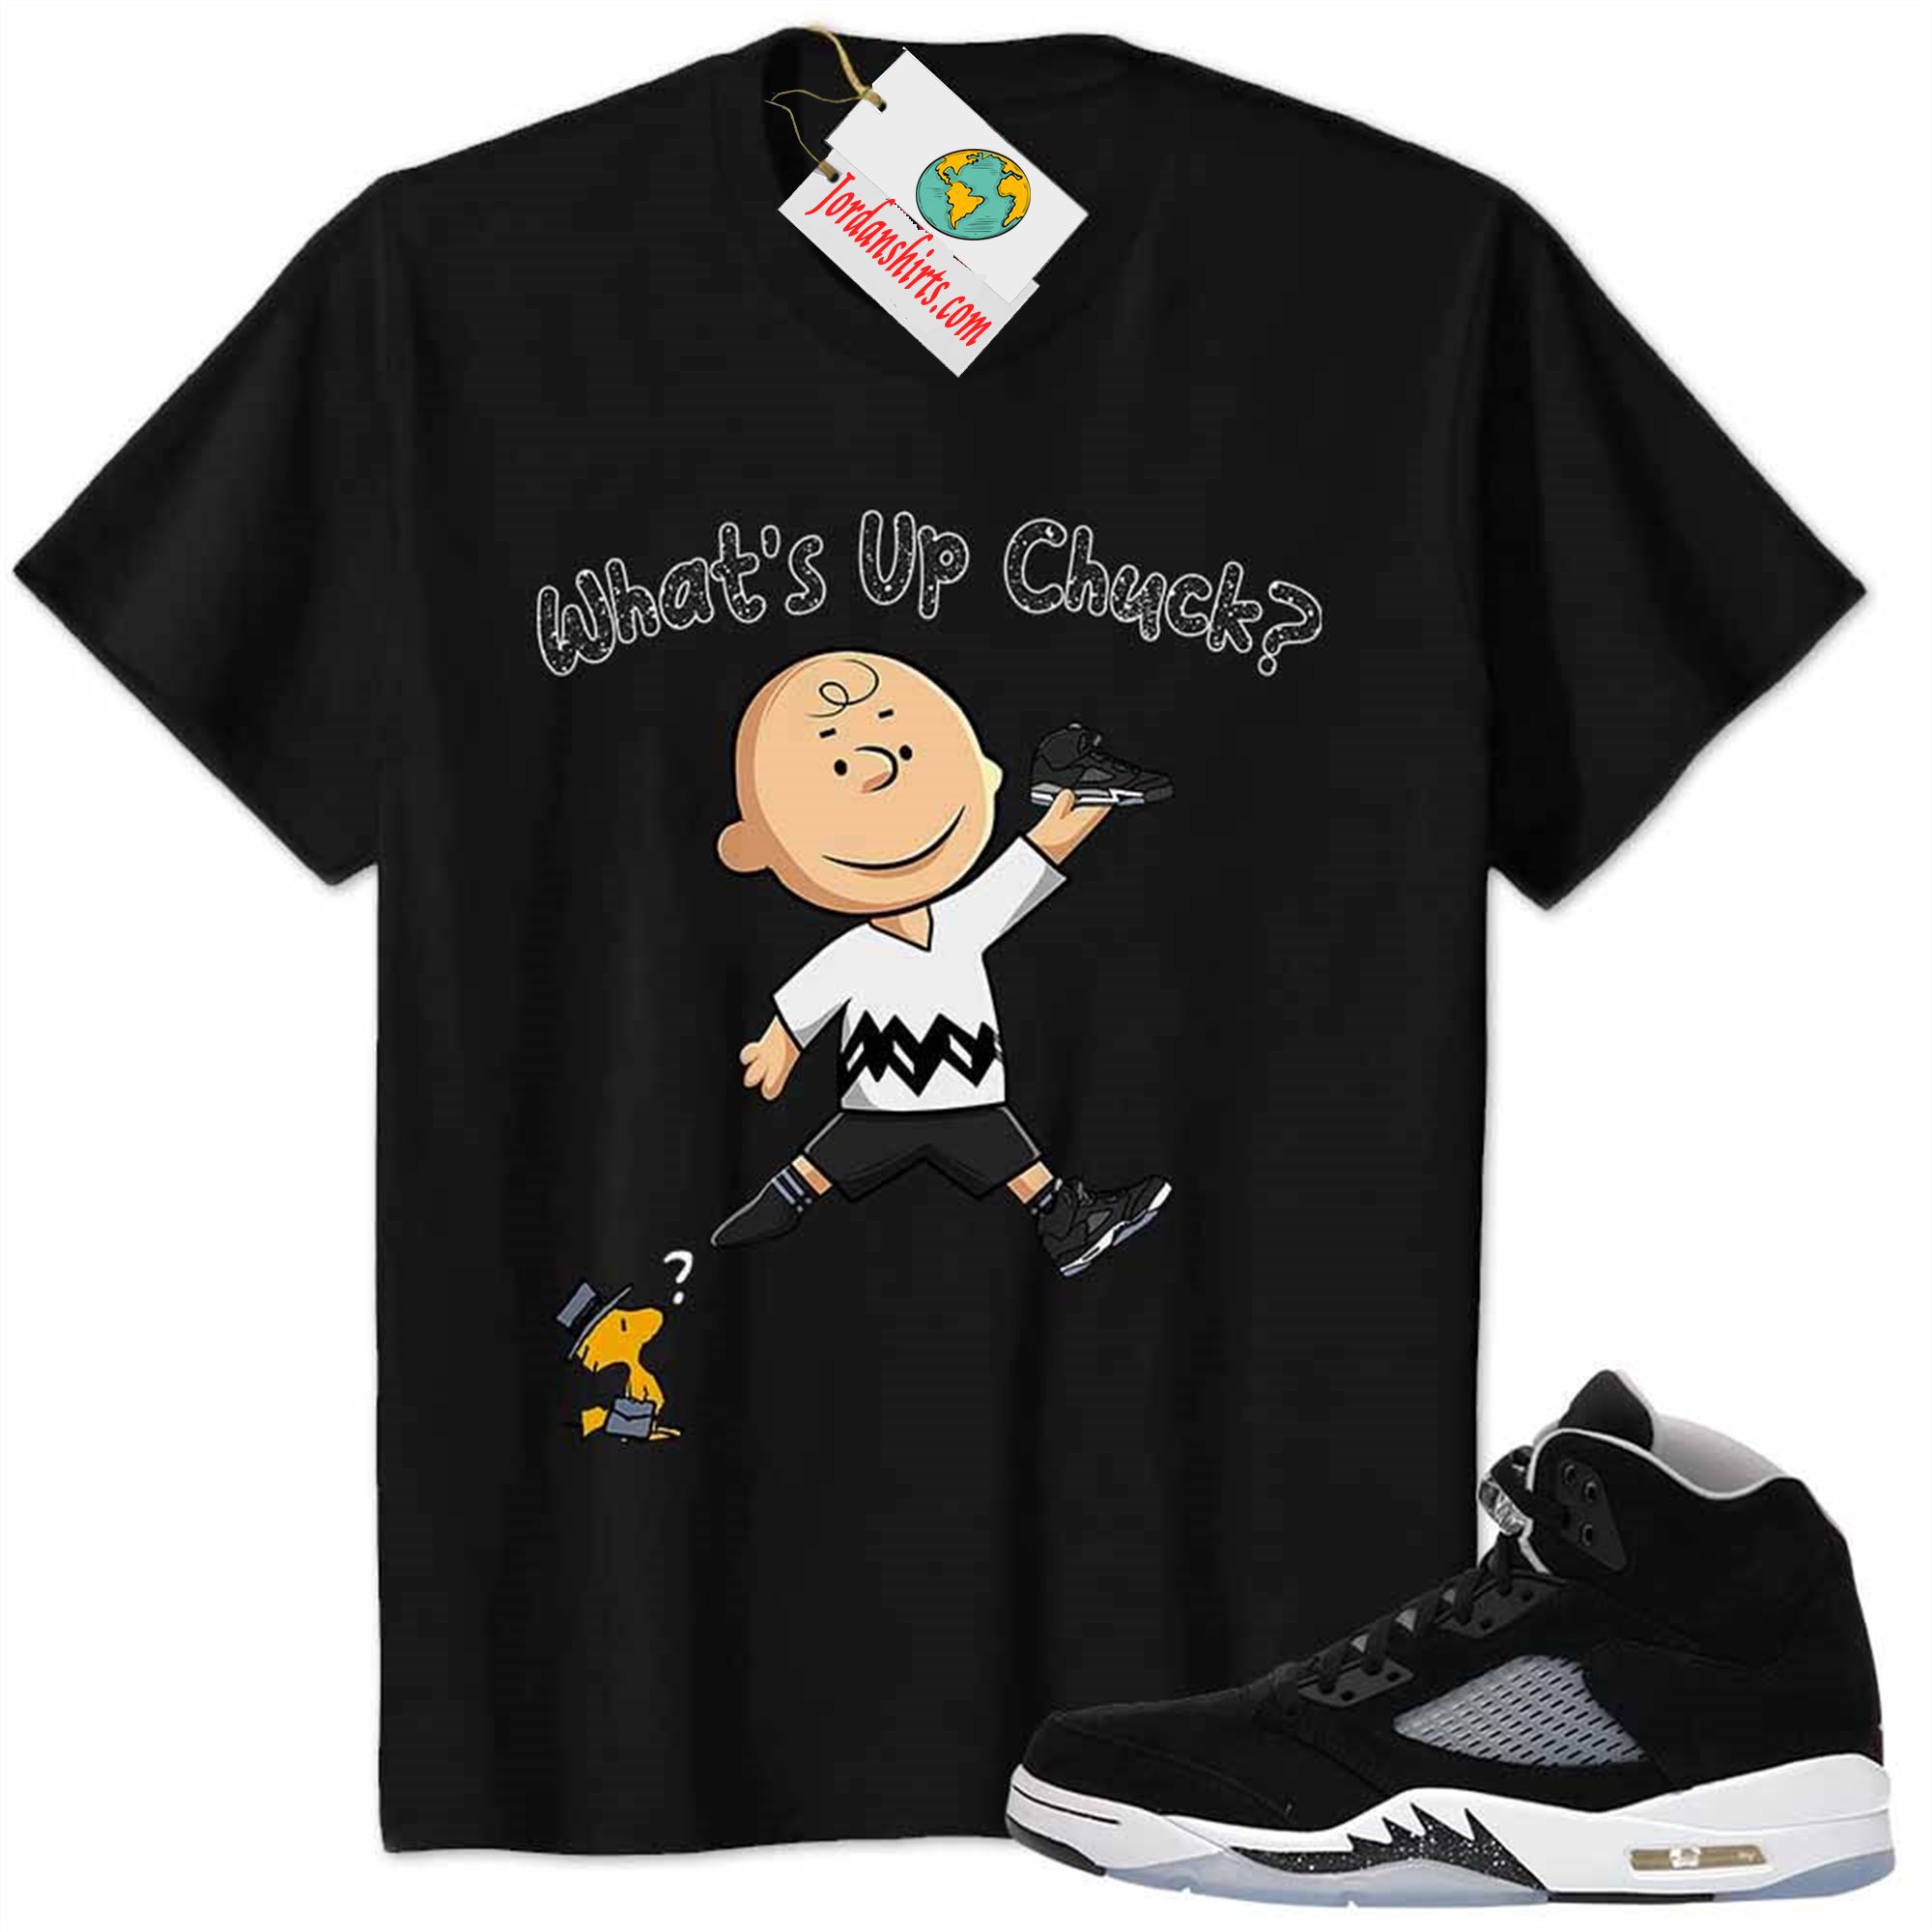 Jordan 5 Shirt, Moonlight Shirt Whats Up Chuck Black Plus Size Up To 5xl